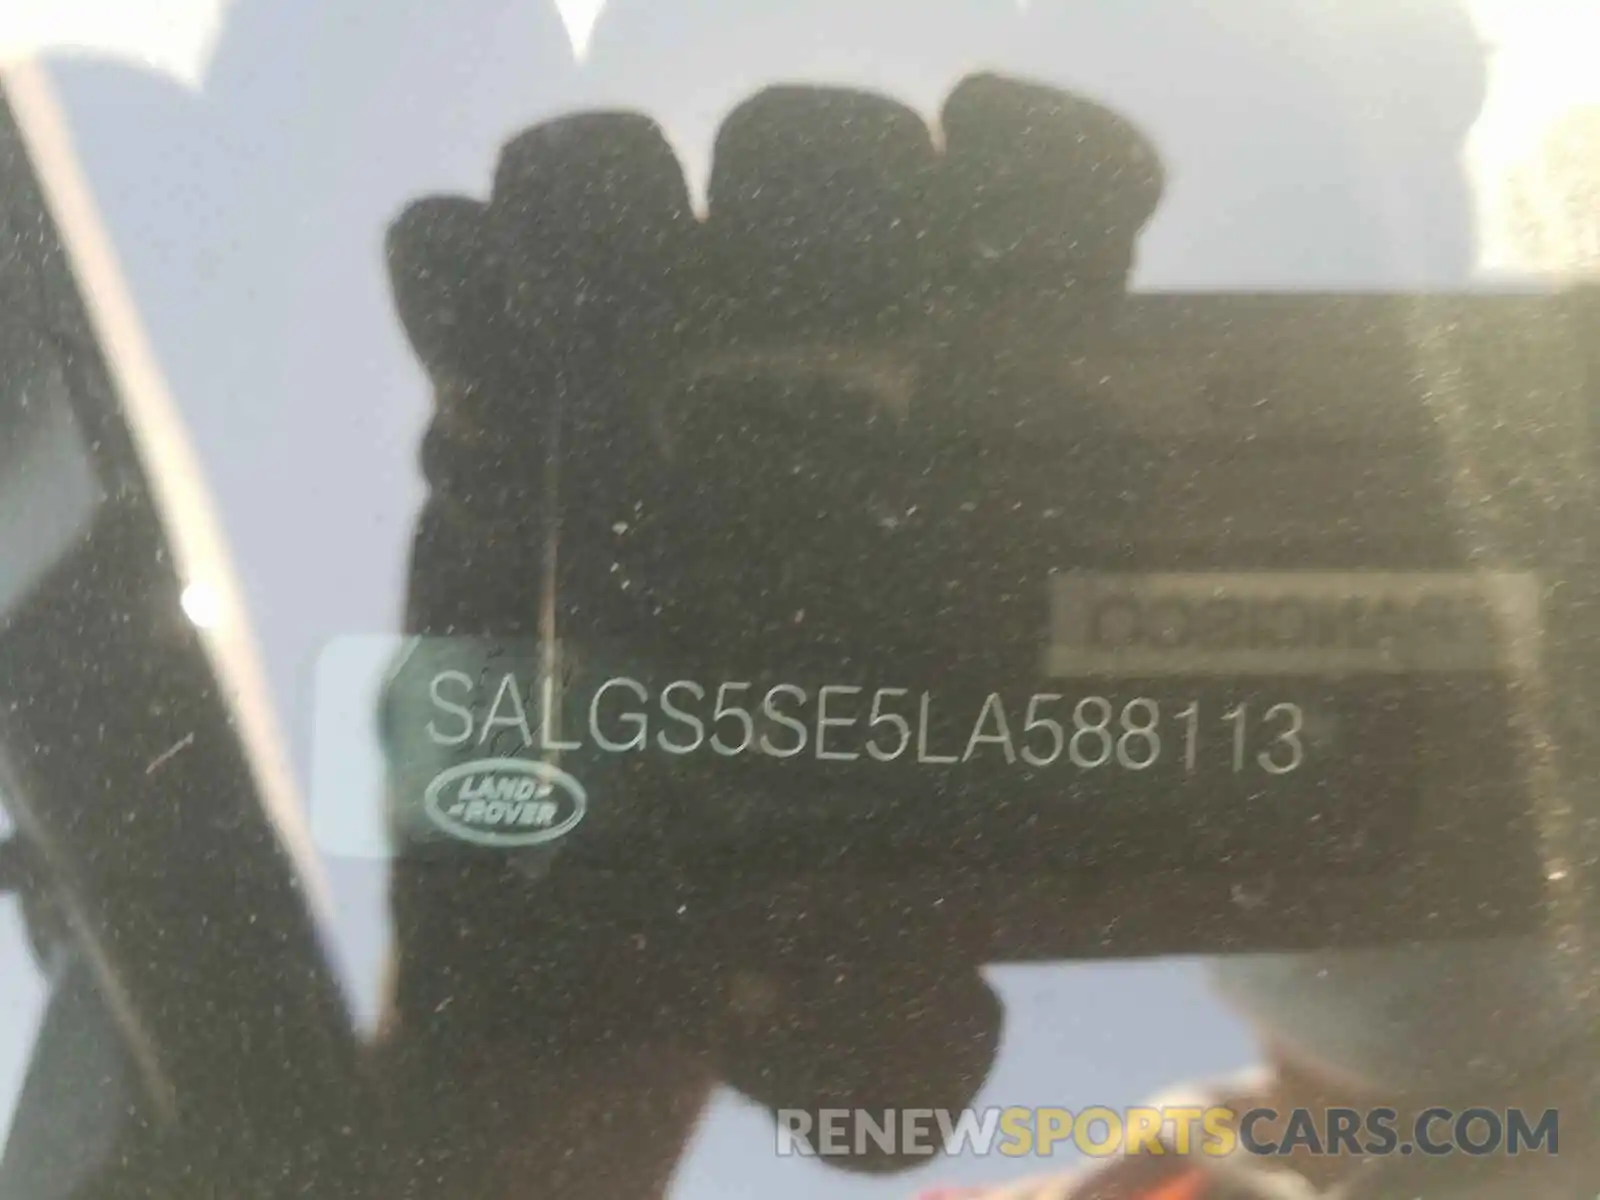 10 Photograph of a damaged car SALGS5SE5LA588113 LAND ROVER RANGEROVER 2020